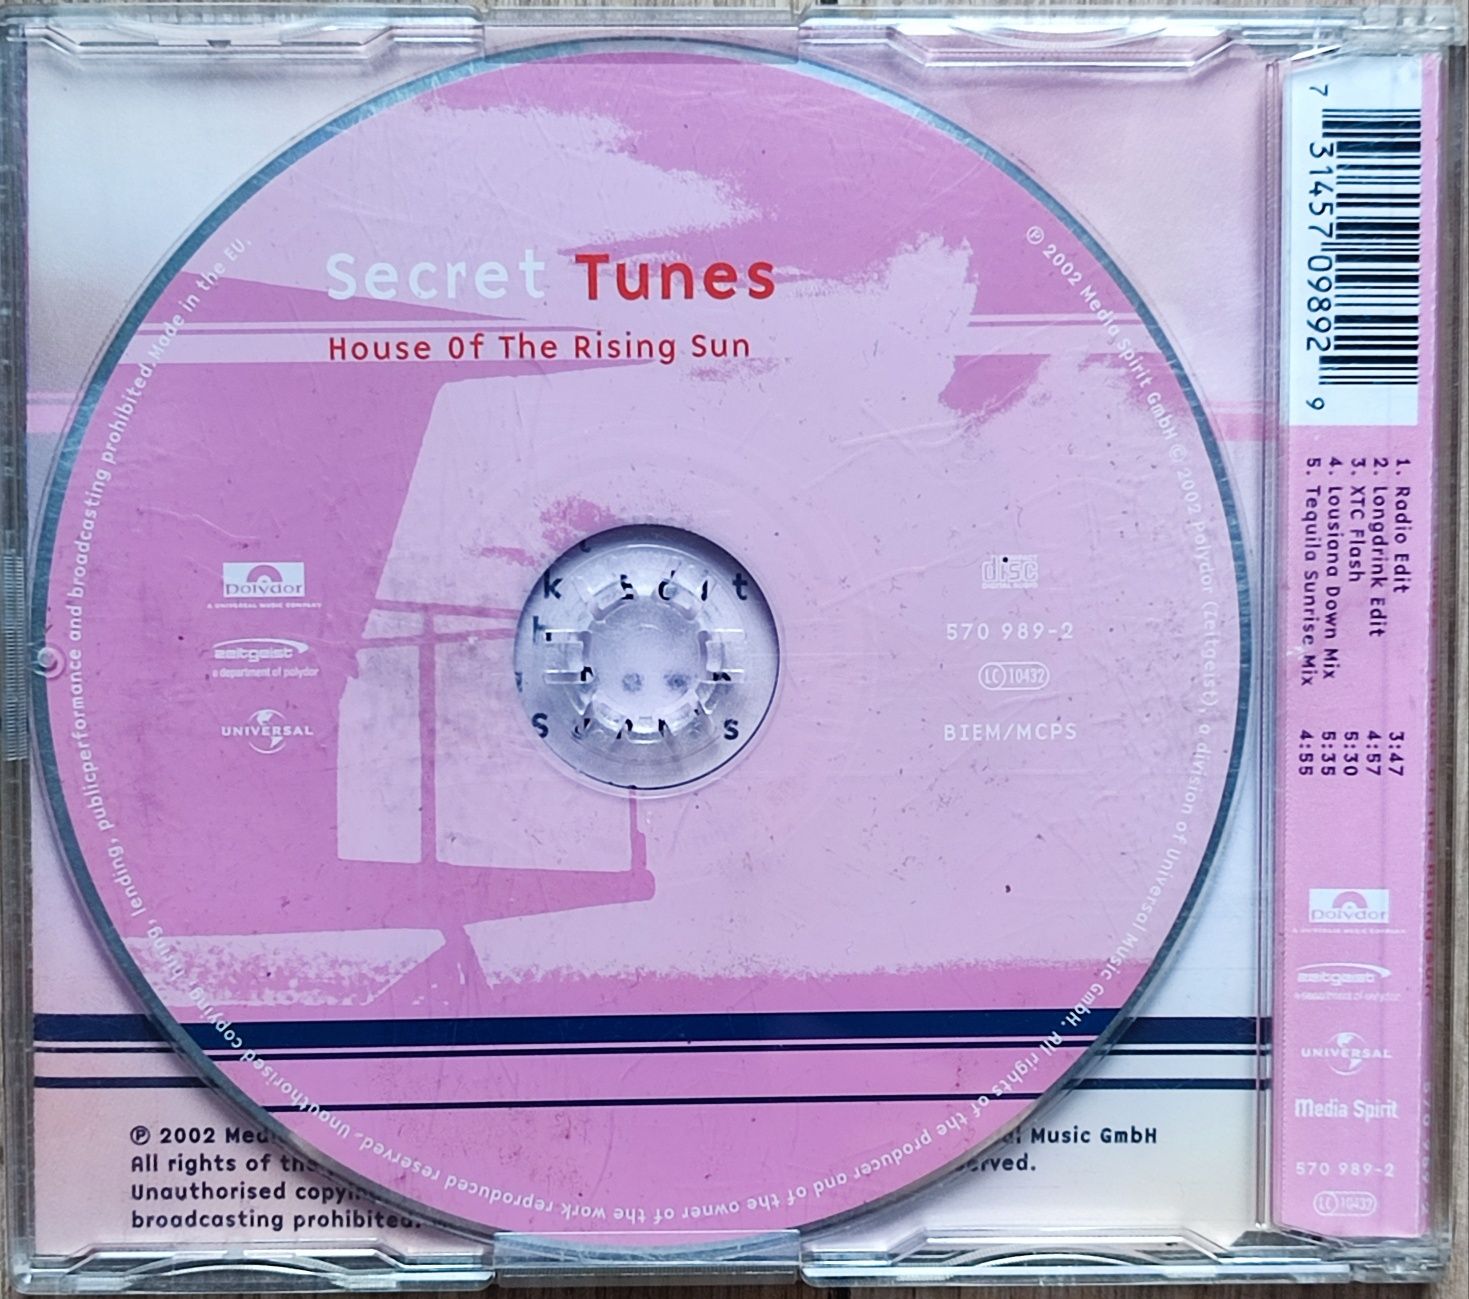 SECRET TUNES - House Of The Rising Sun CD (Maxi Single)  5/6